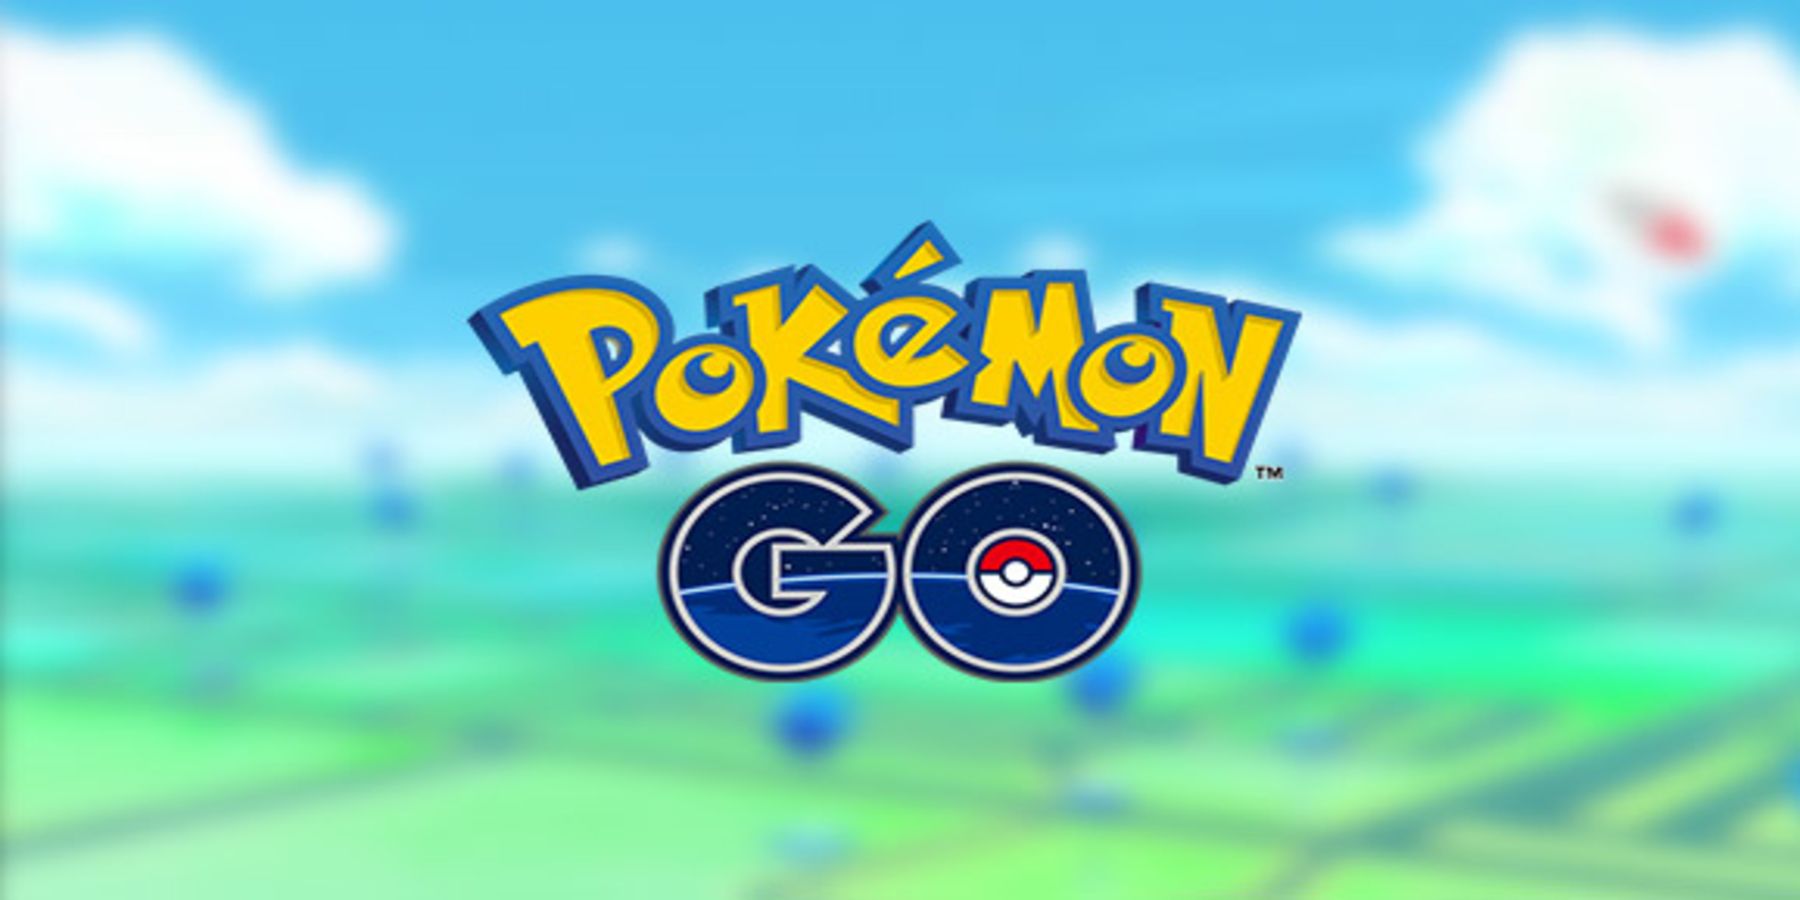 pokemon go official logo screenshot